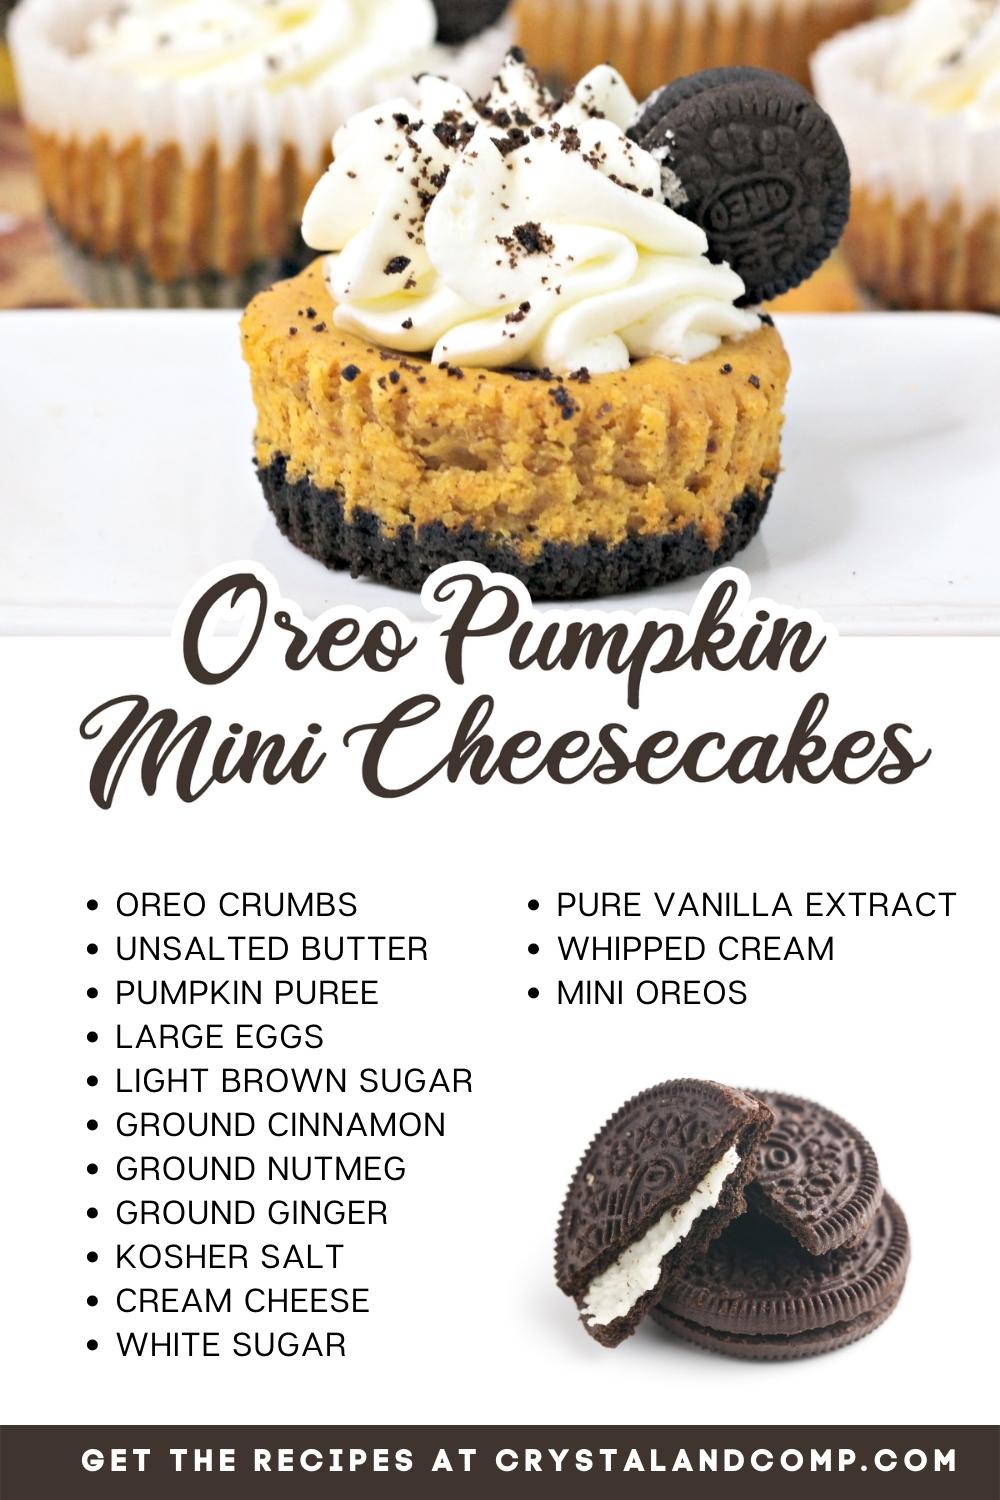 oreo pumpkin mini cheesecakes with ingredients